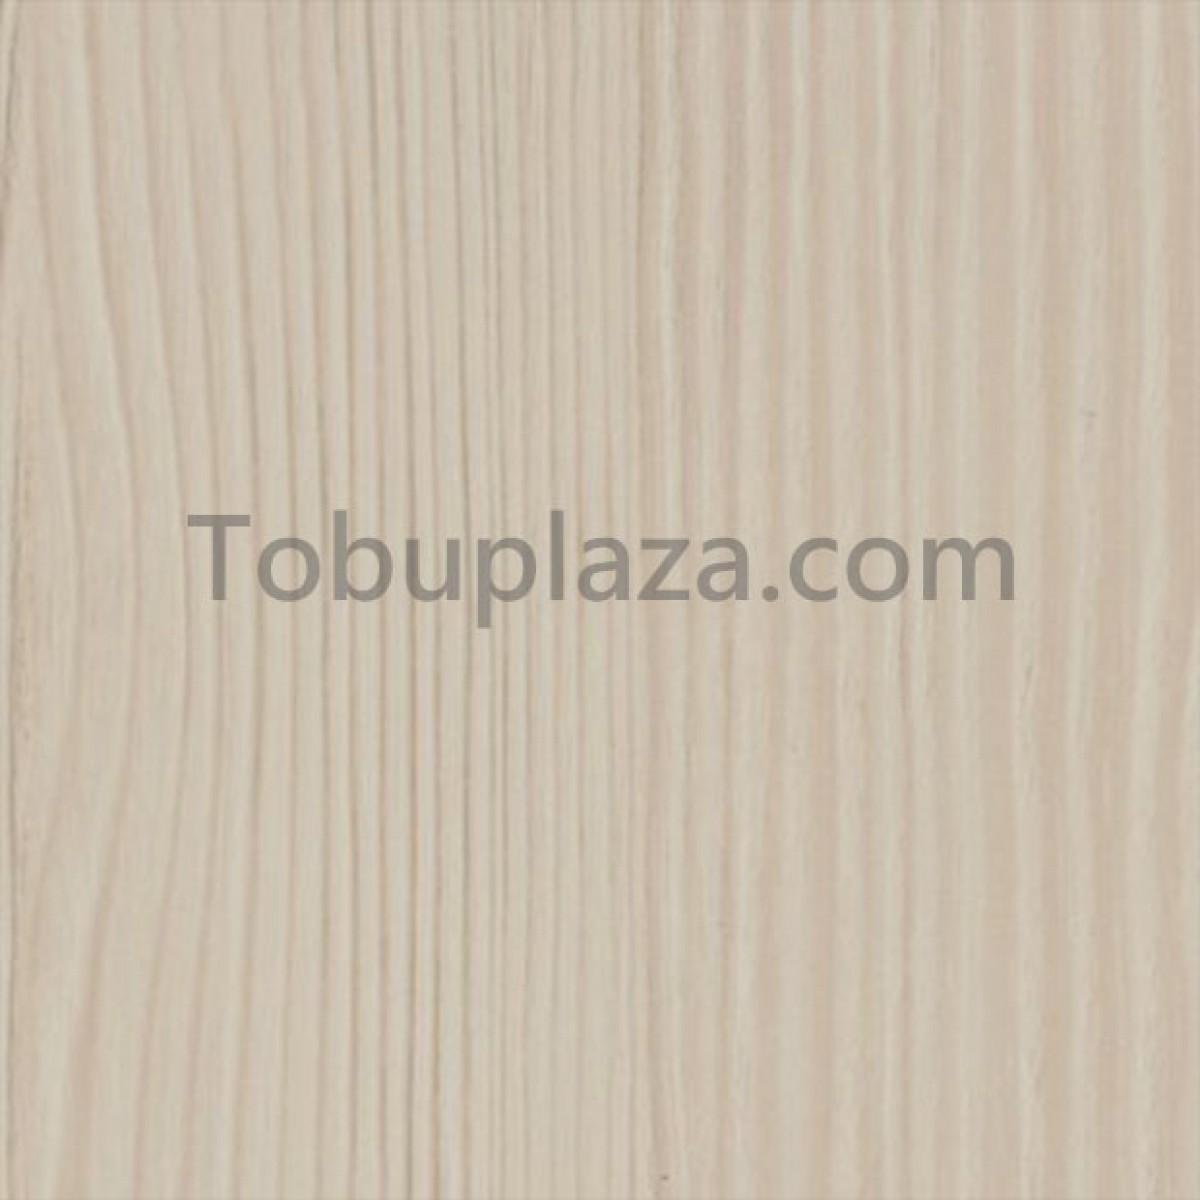 Tobuplaza 3M Fine Wood 木紋系列 - FW